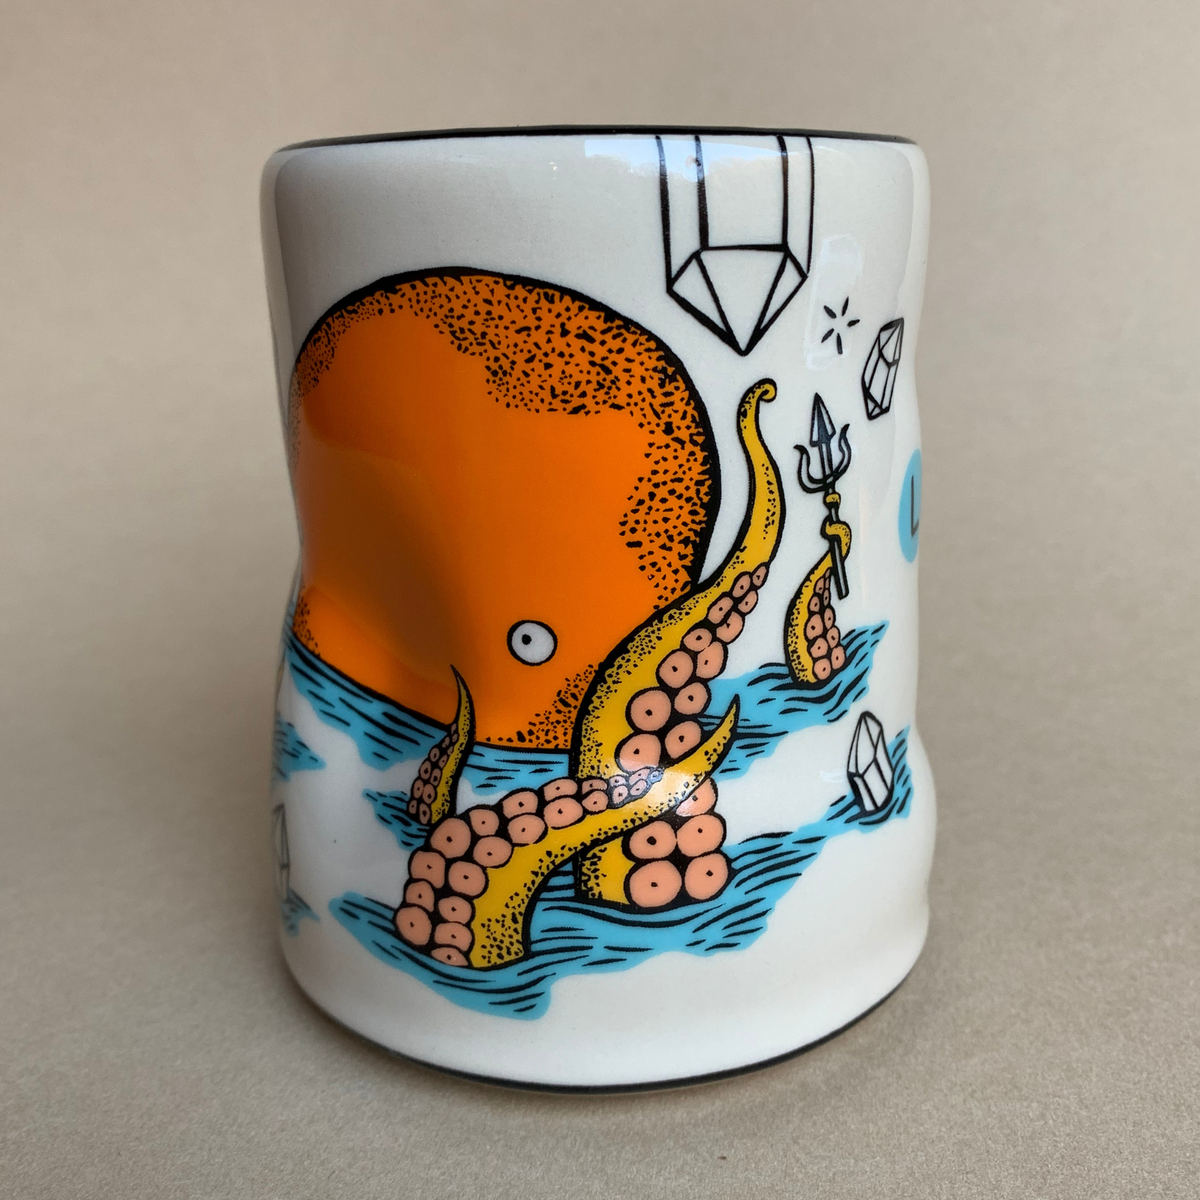 Lucky Kraken Cup - XLarge